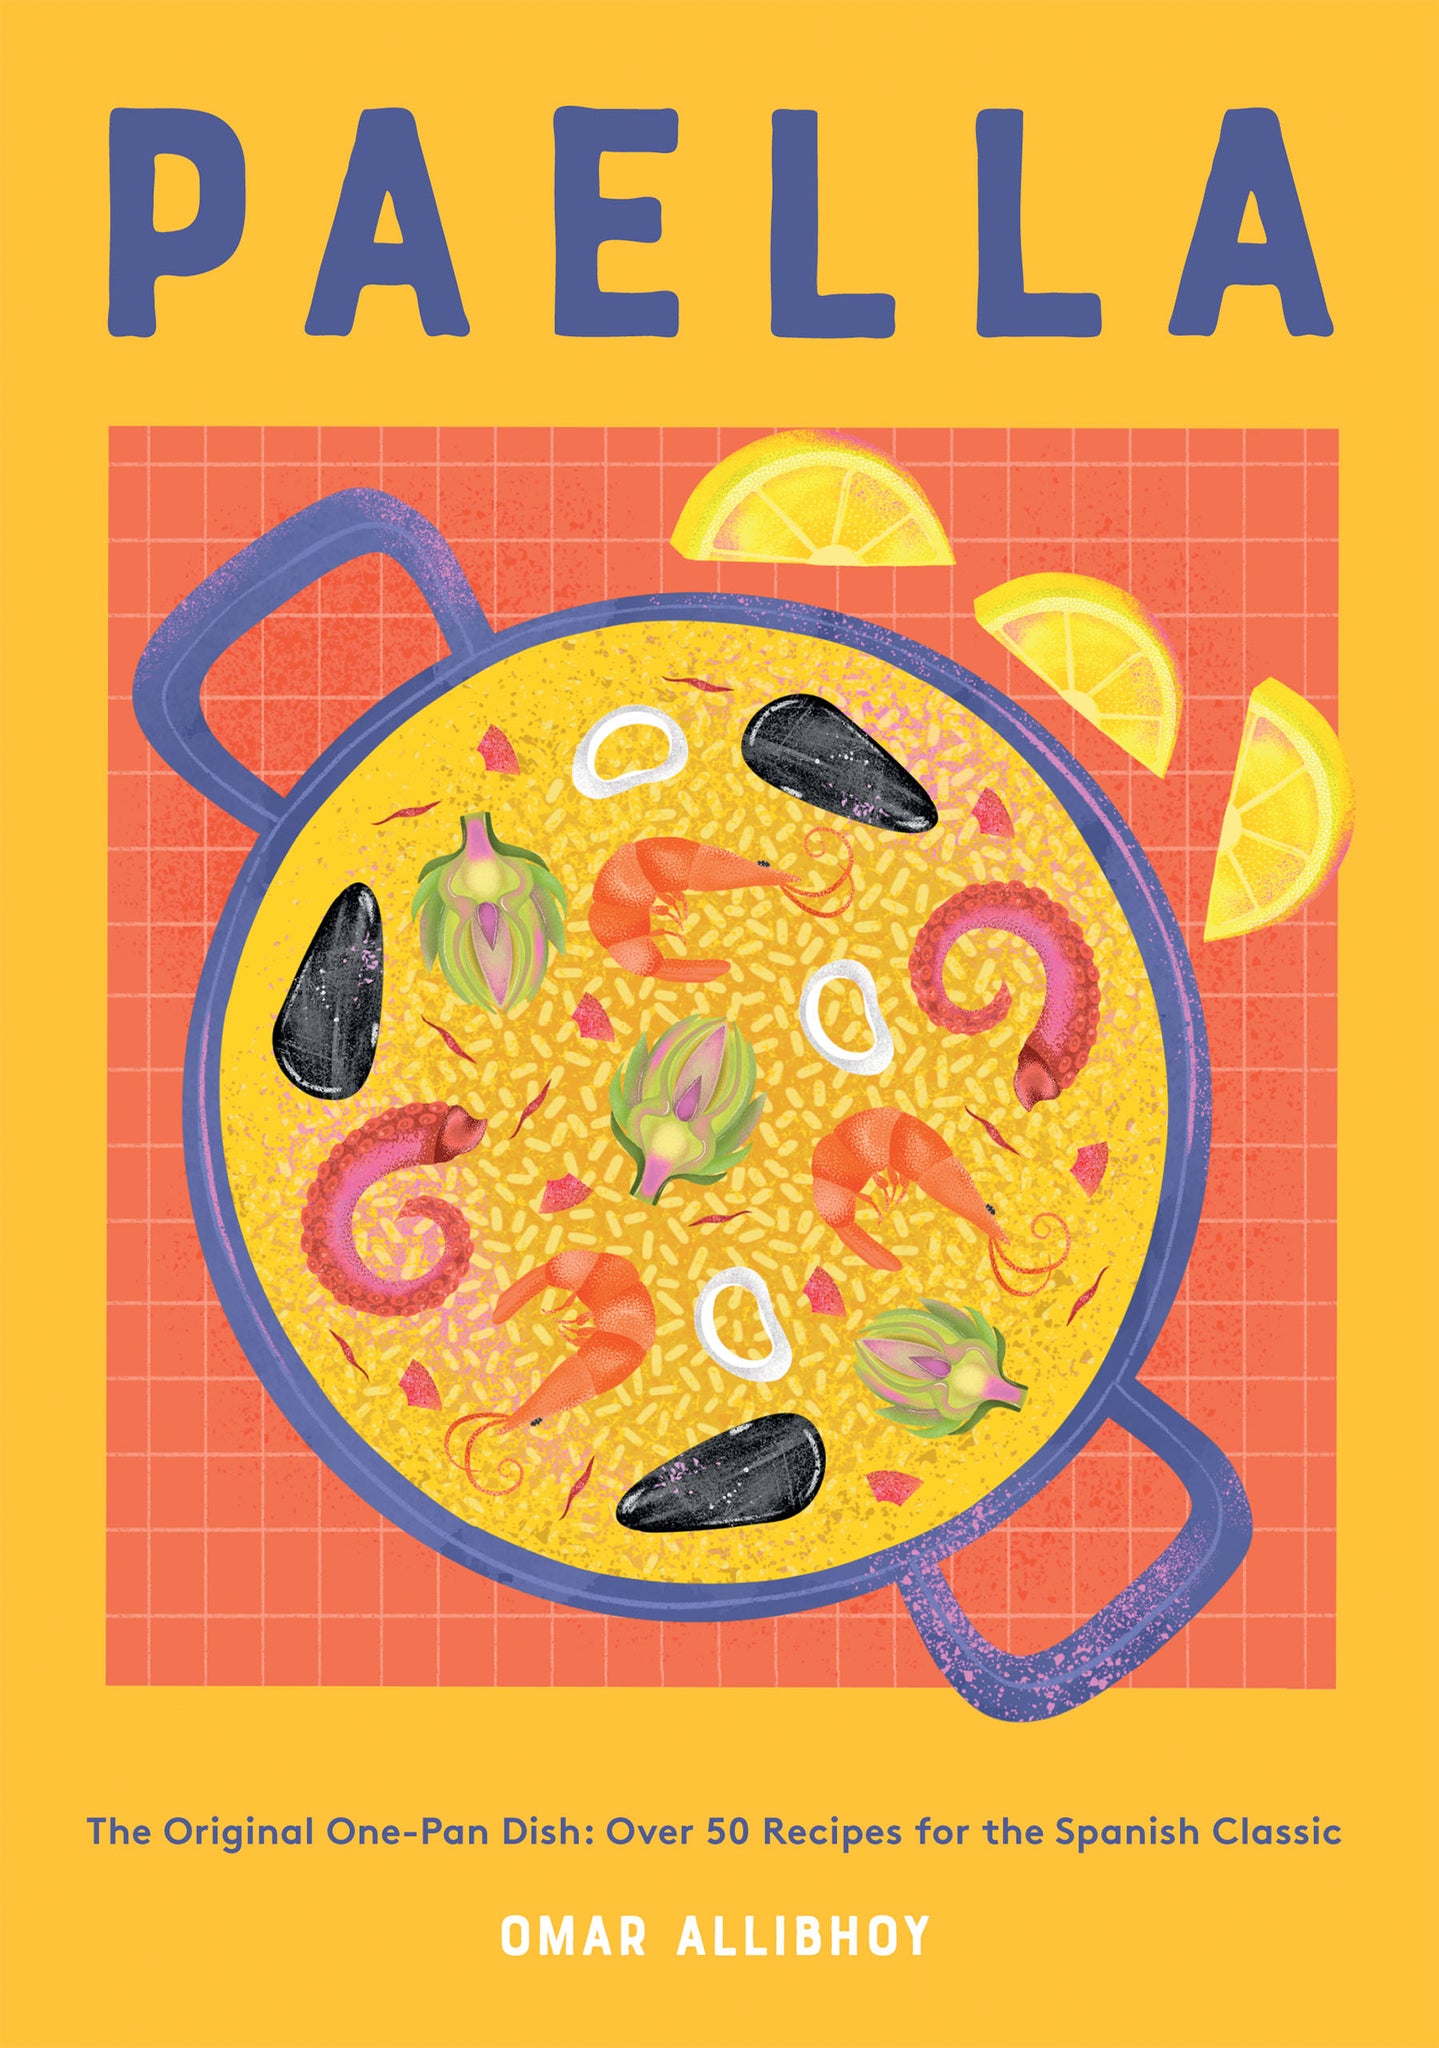 Paella The Original One-Pan Dish